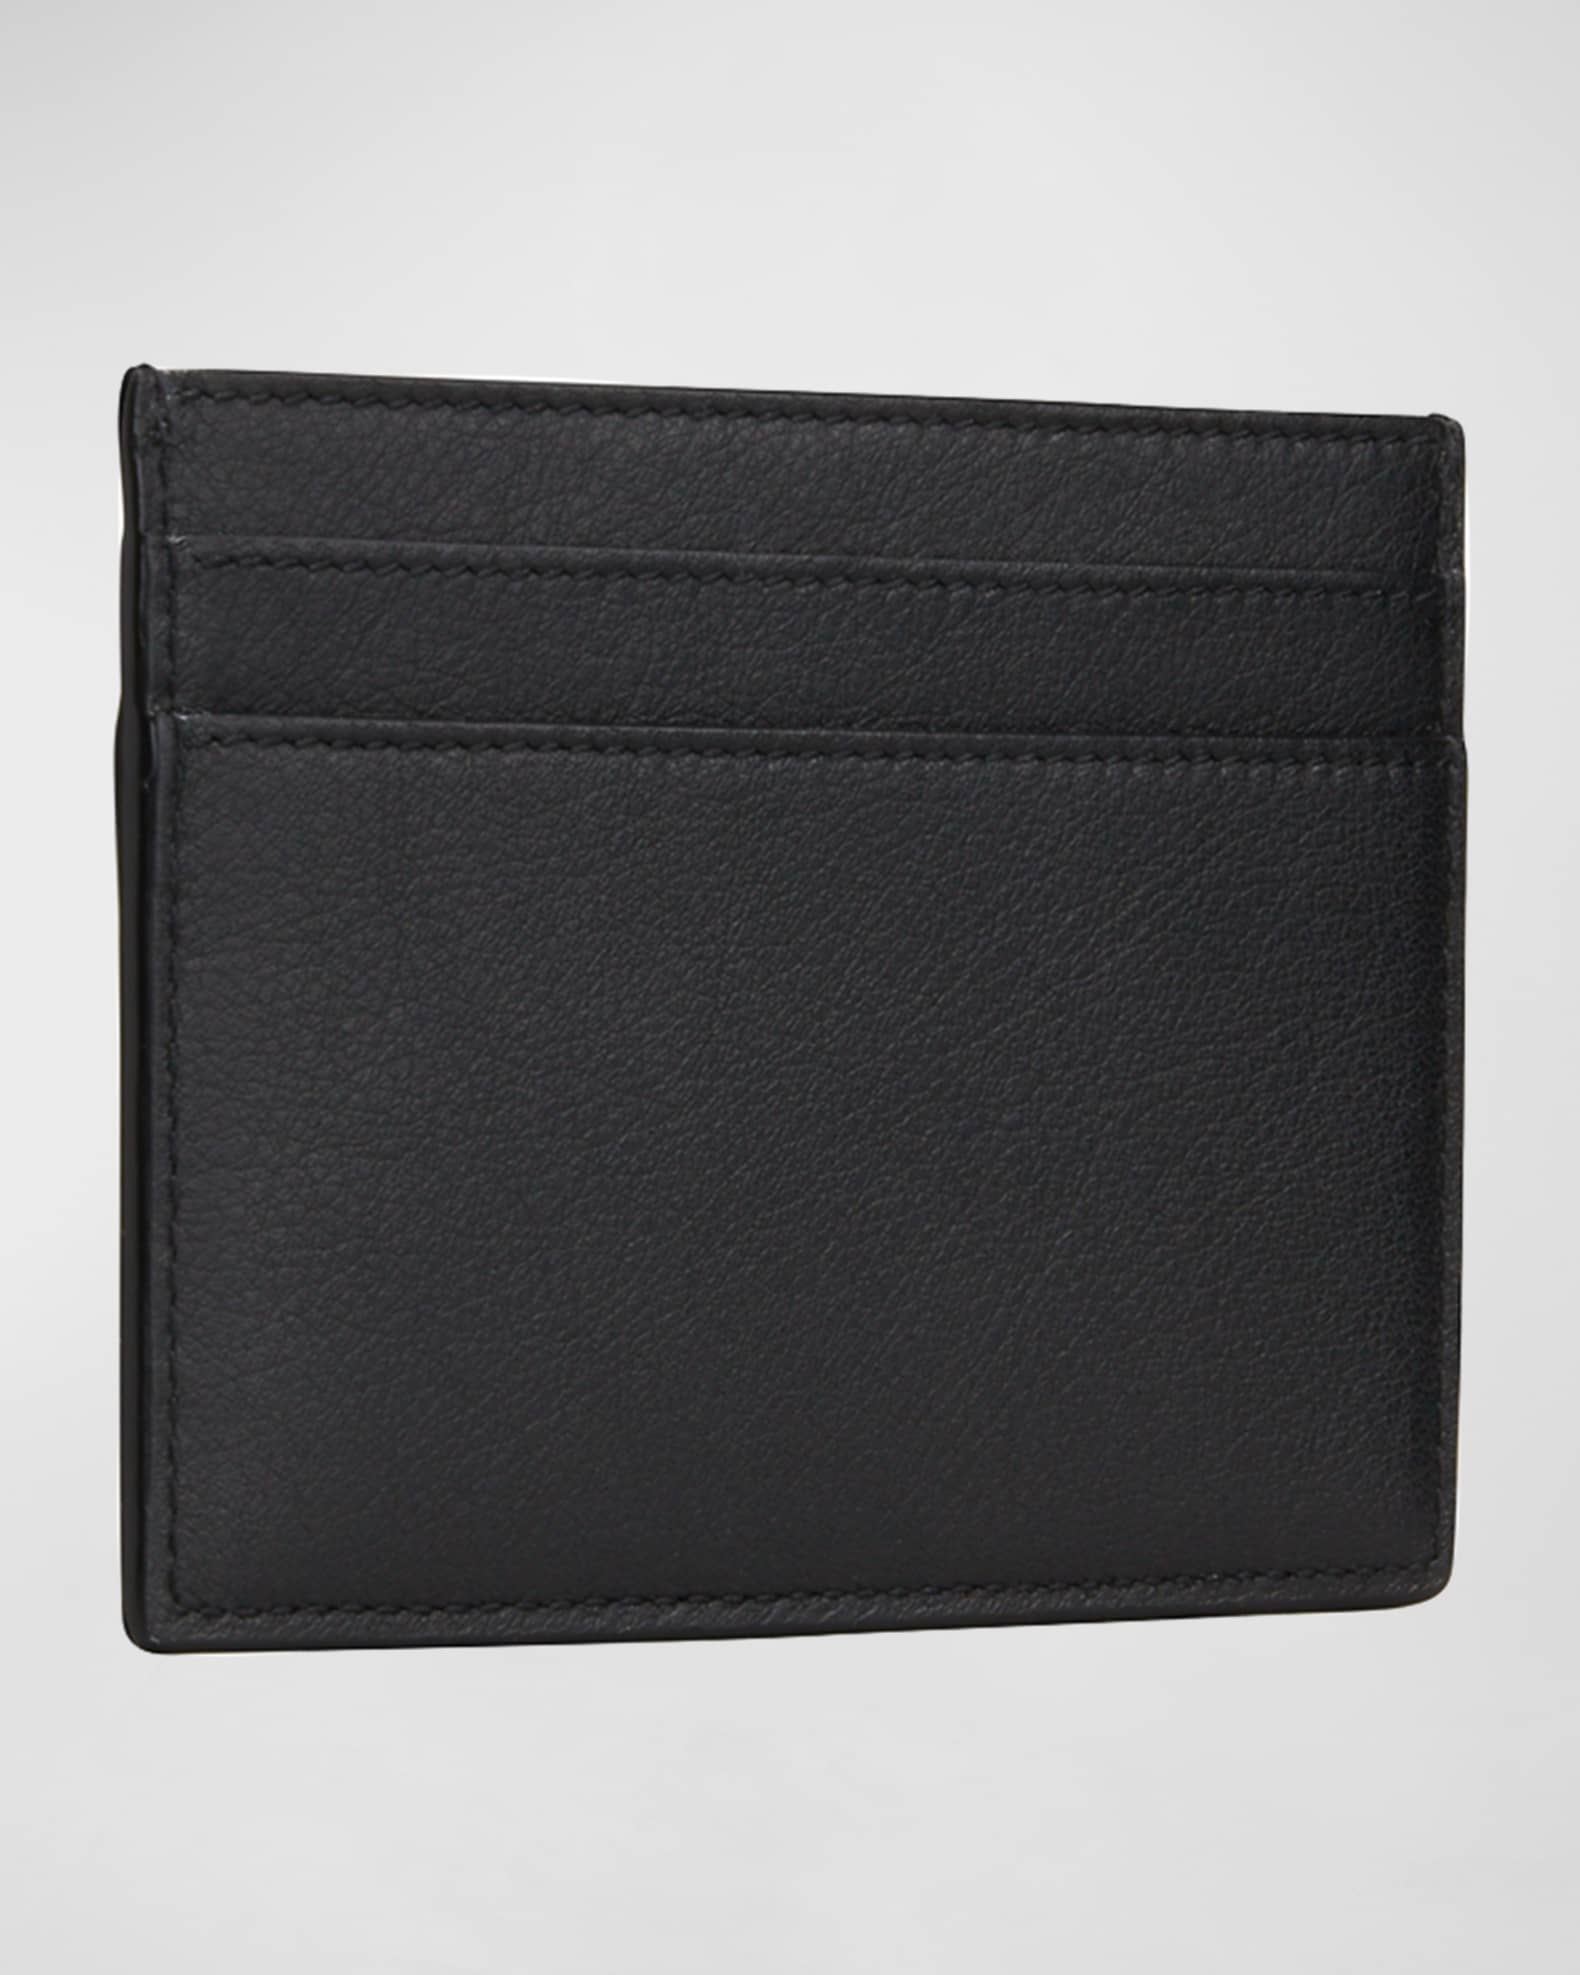 Saint Laurent YSL Tiny Monogram Card Case in Smooth Leather | Neiman Marcus